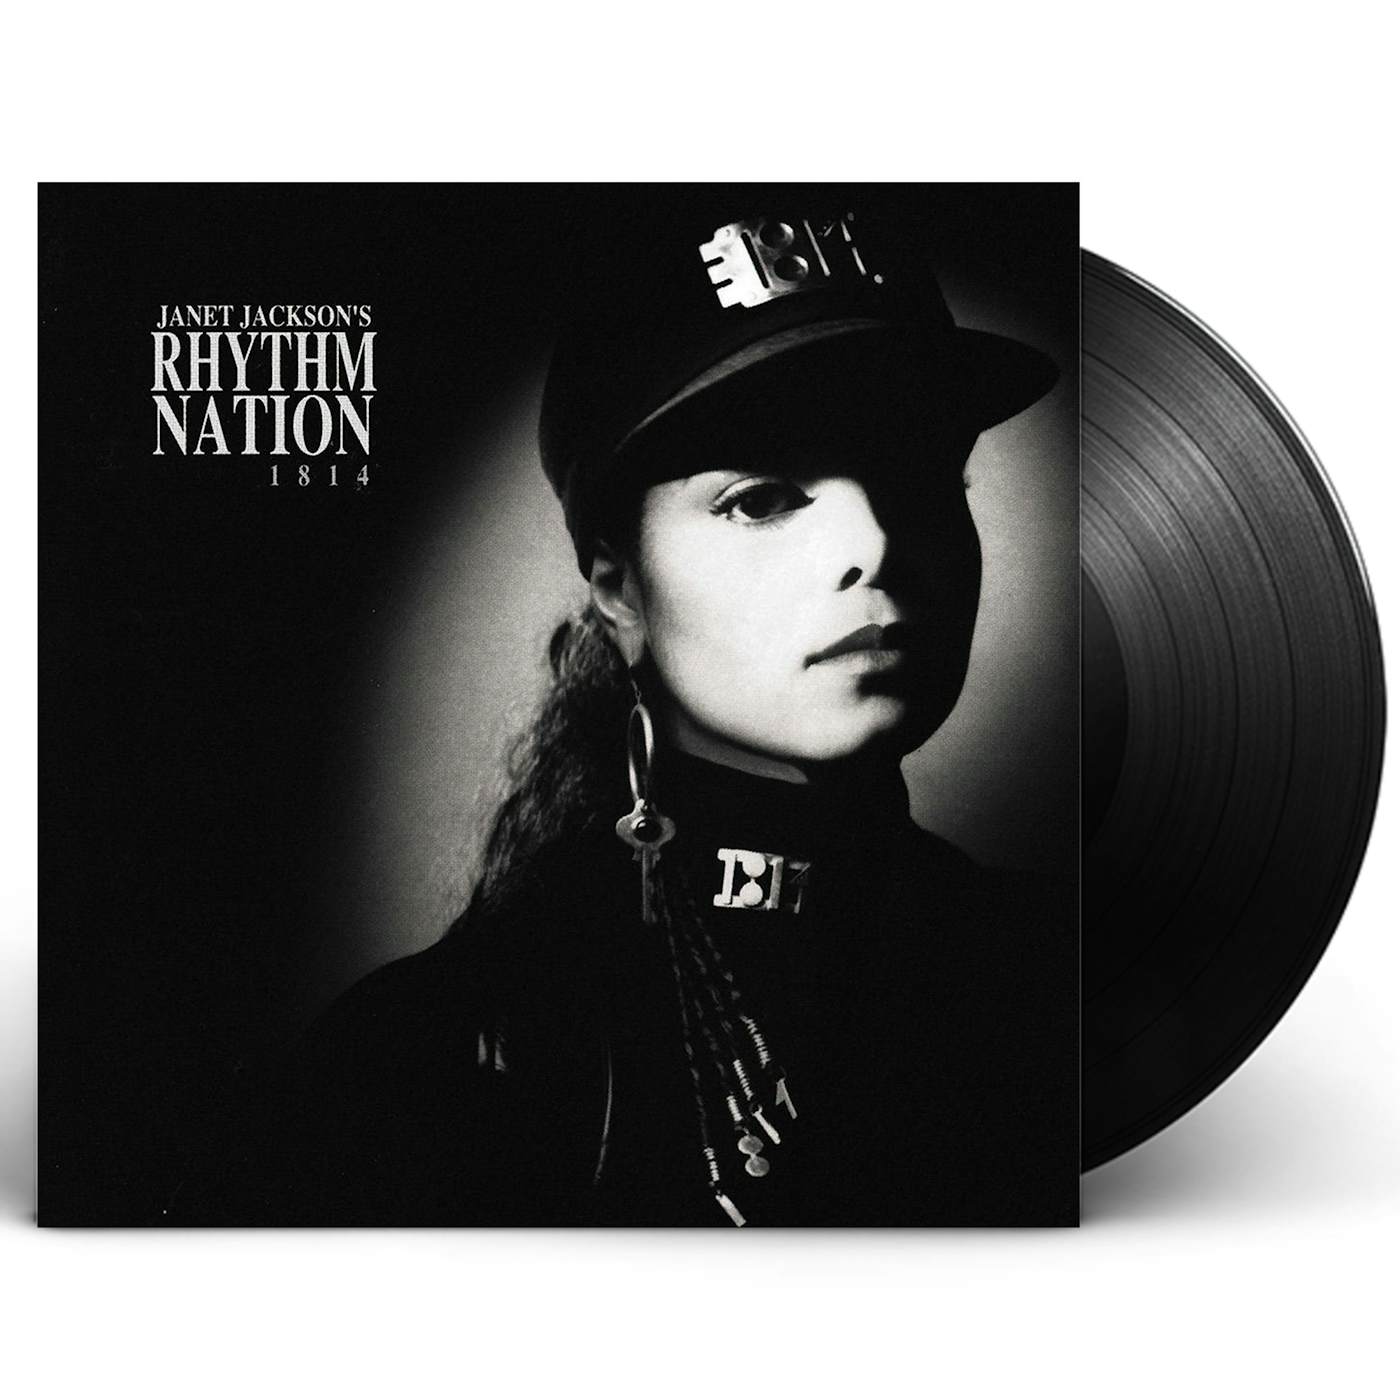 Janet Jackson "Janet Jackson's Rhythm Nation 1814" 2xLP Vinyl